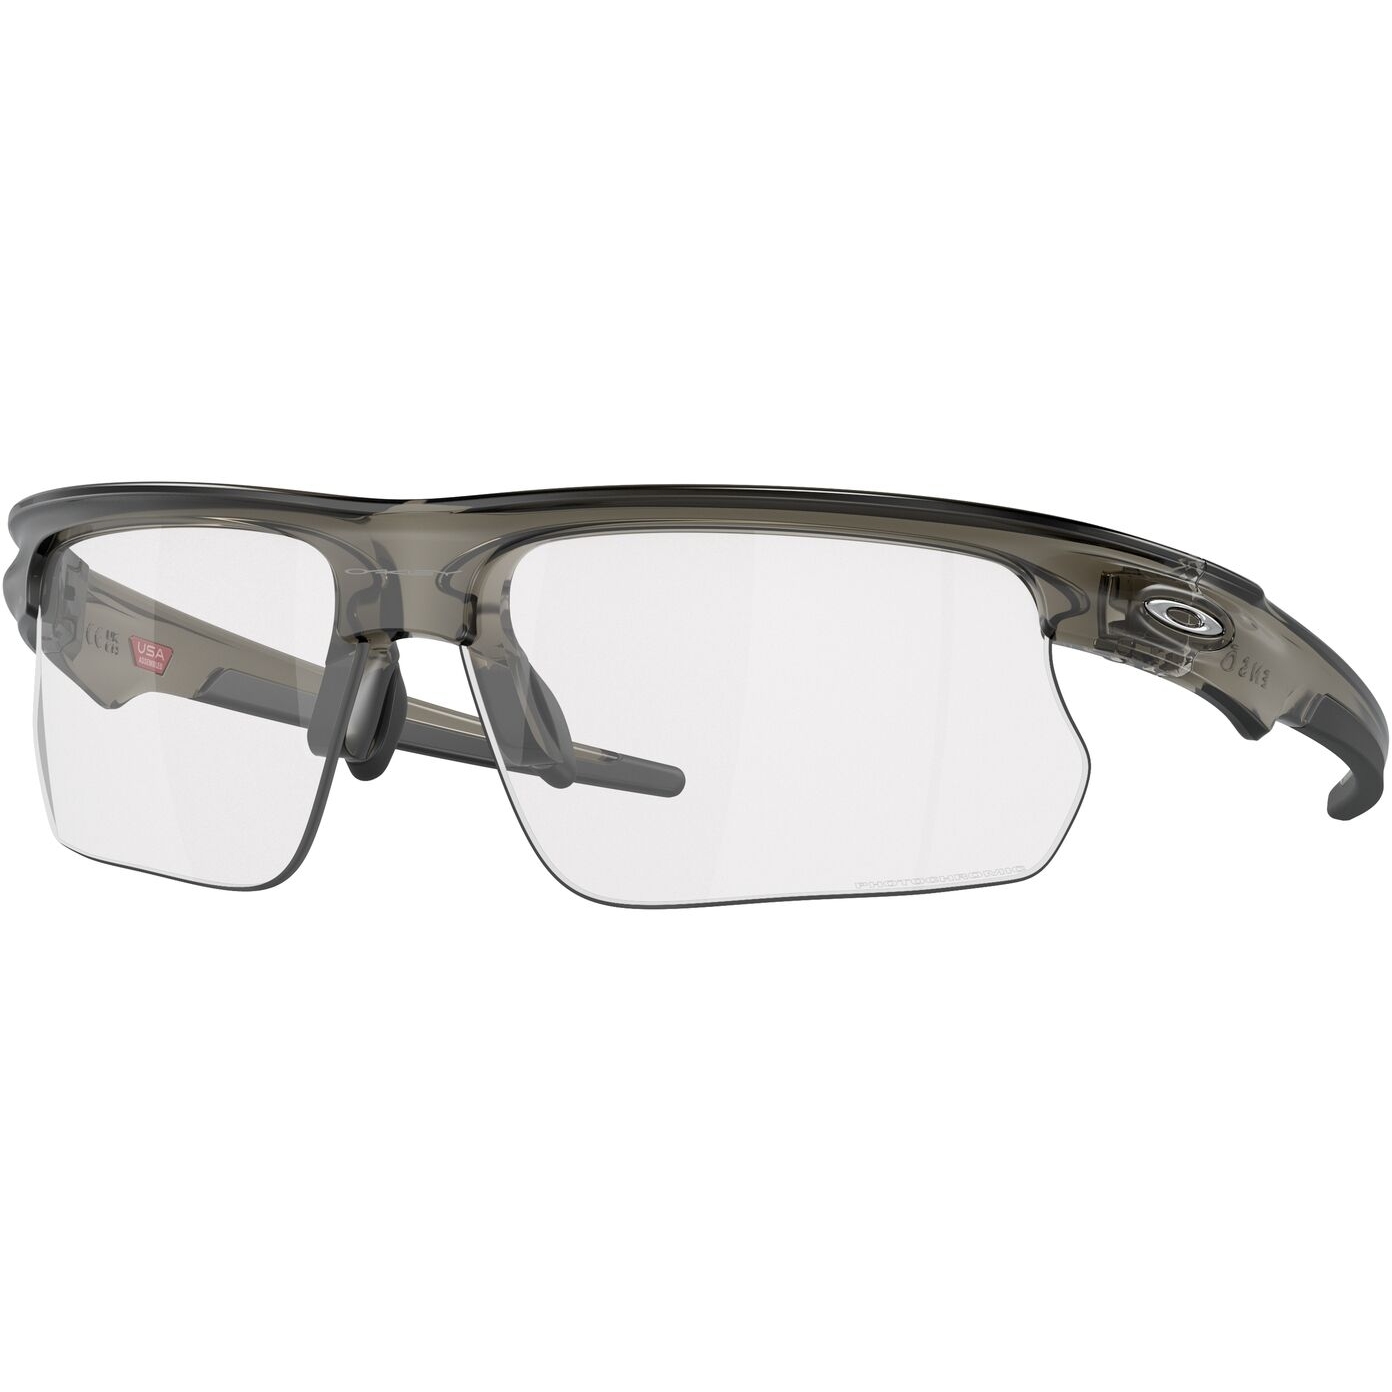 Picture of Oakley Bisphaera Glasses - Grey Smoke/Photochromic - OO9400-1168